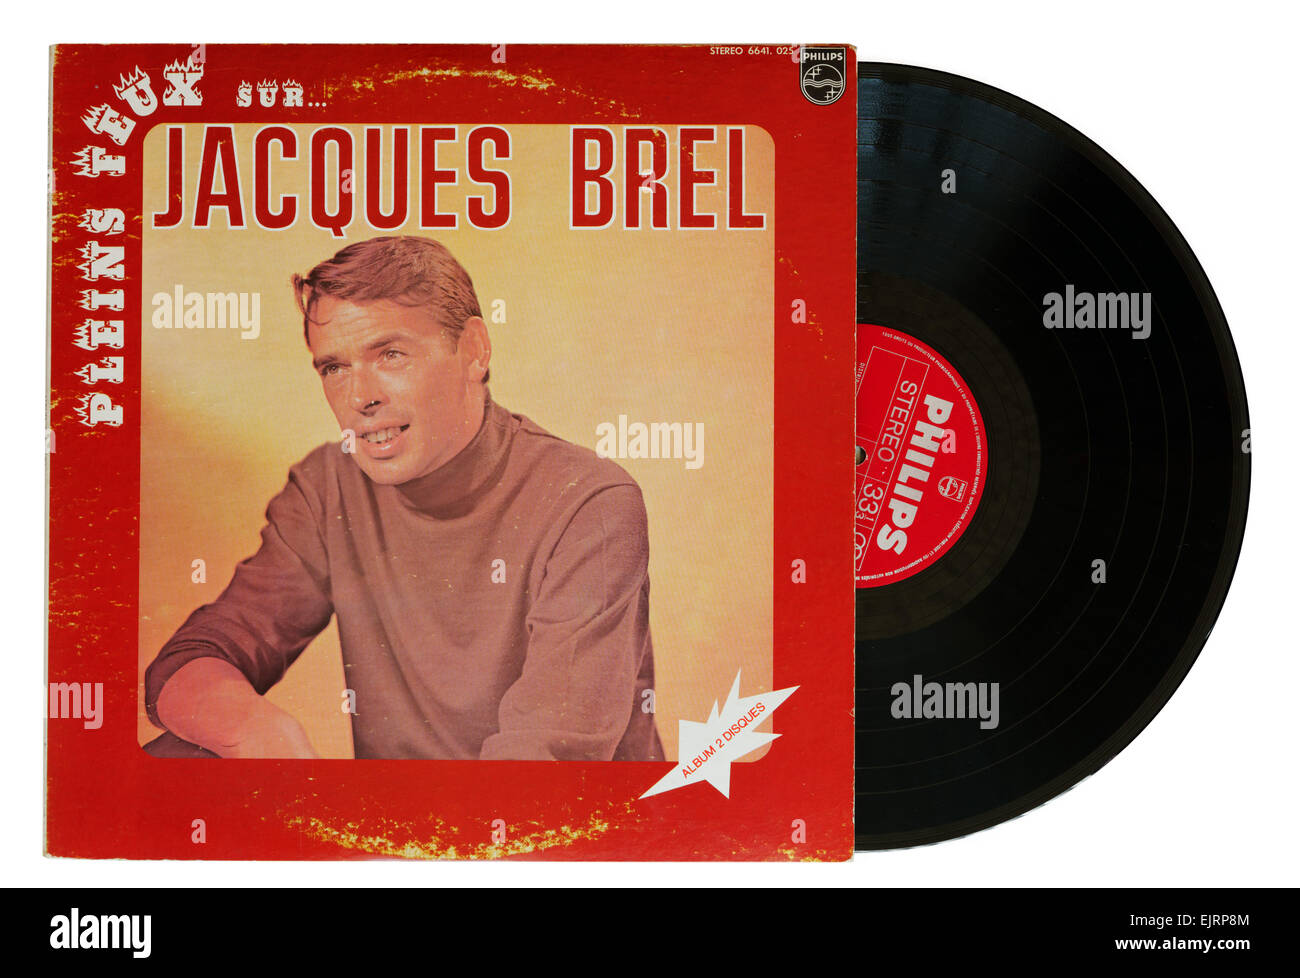 Jacques Brel Vinyl album Stockfoto